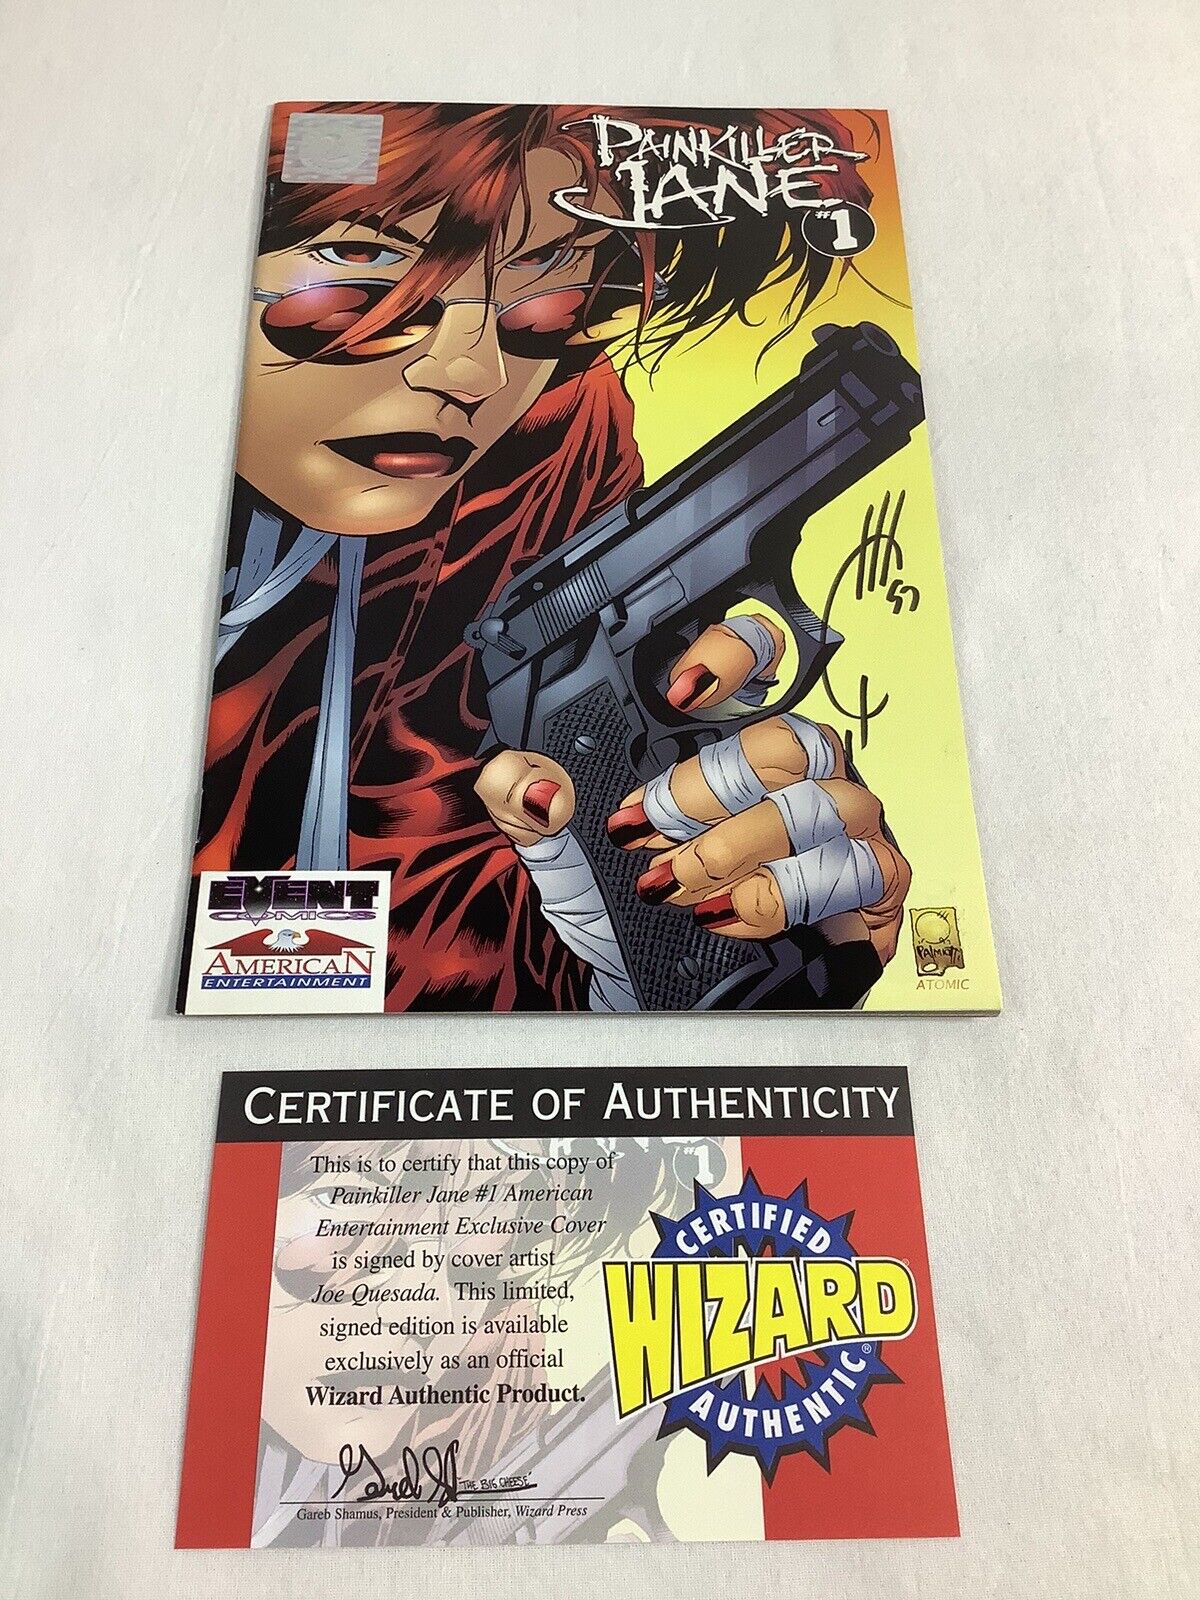 Wizard Painkiller Jane #1 1997 Rare Variant Signed By Joe Quesada COA!